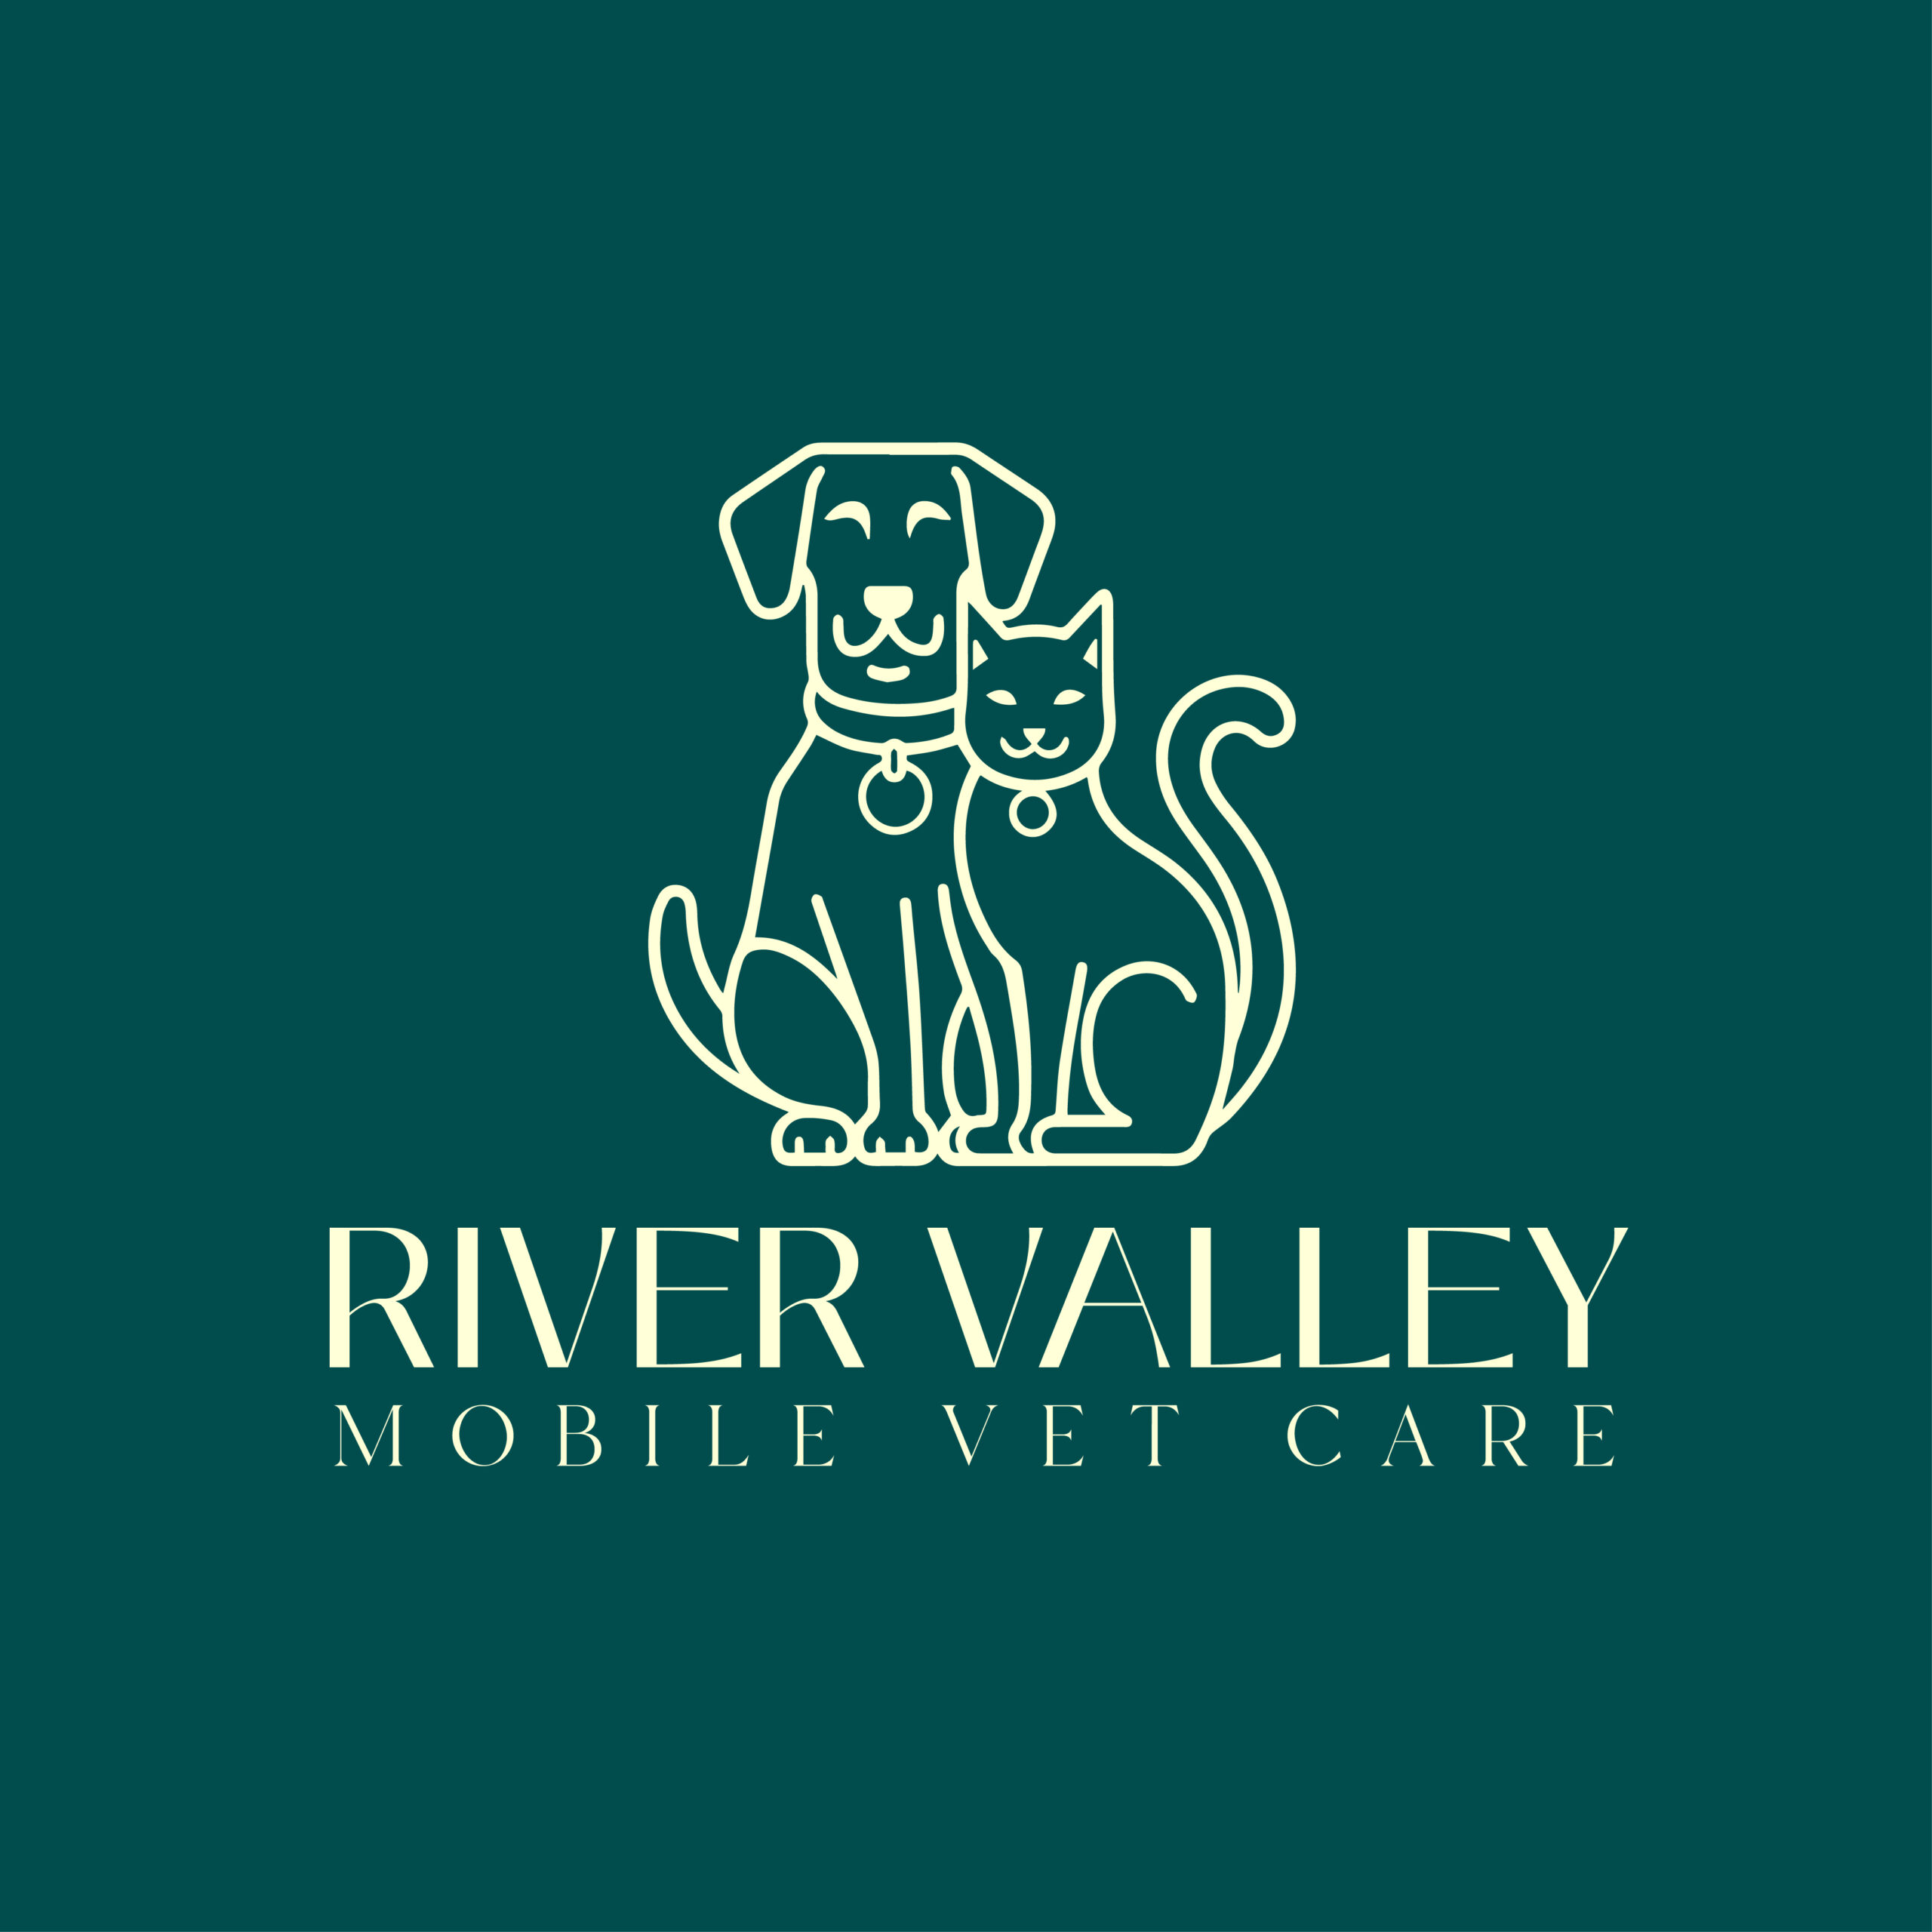 River Valley Mobile Vet Care 